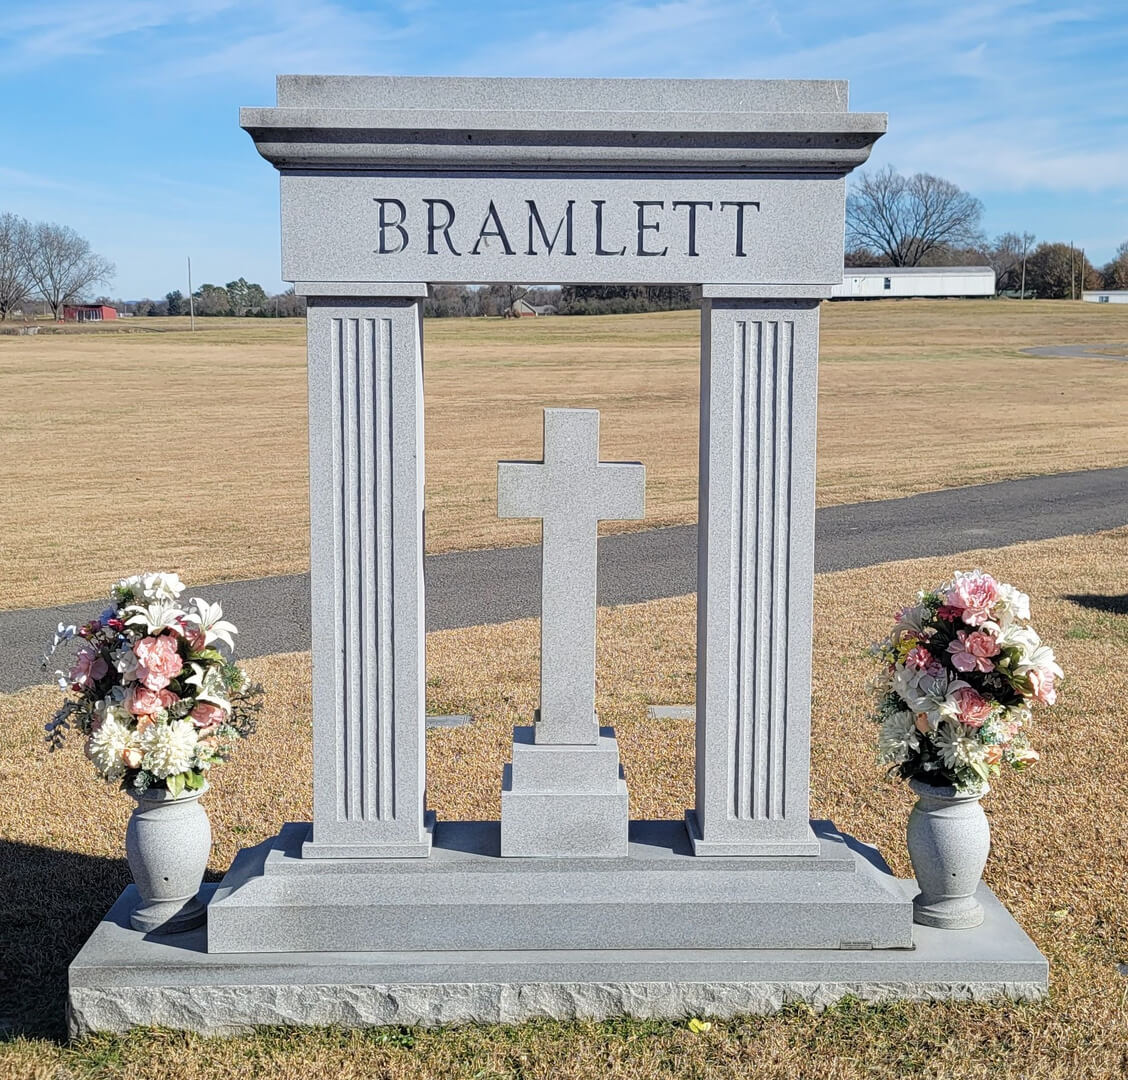 A cross shaped memorial slab with the name Bramlett